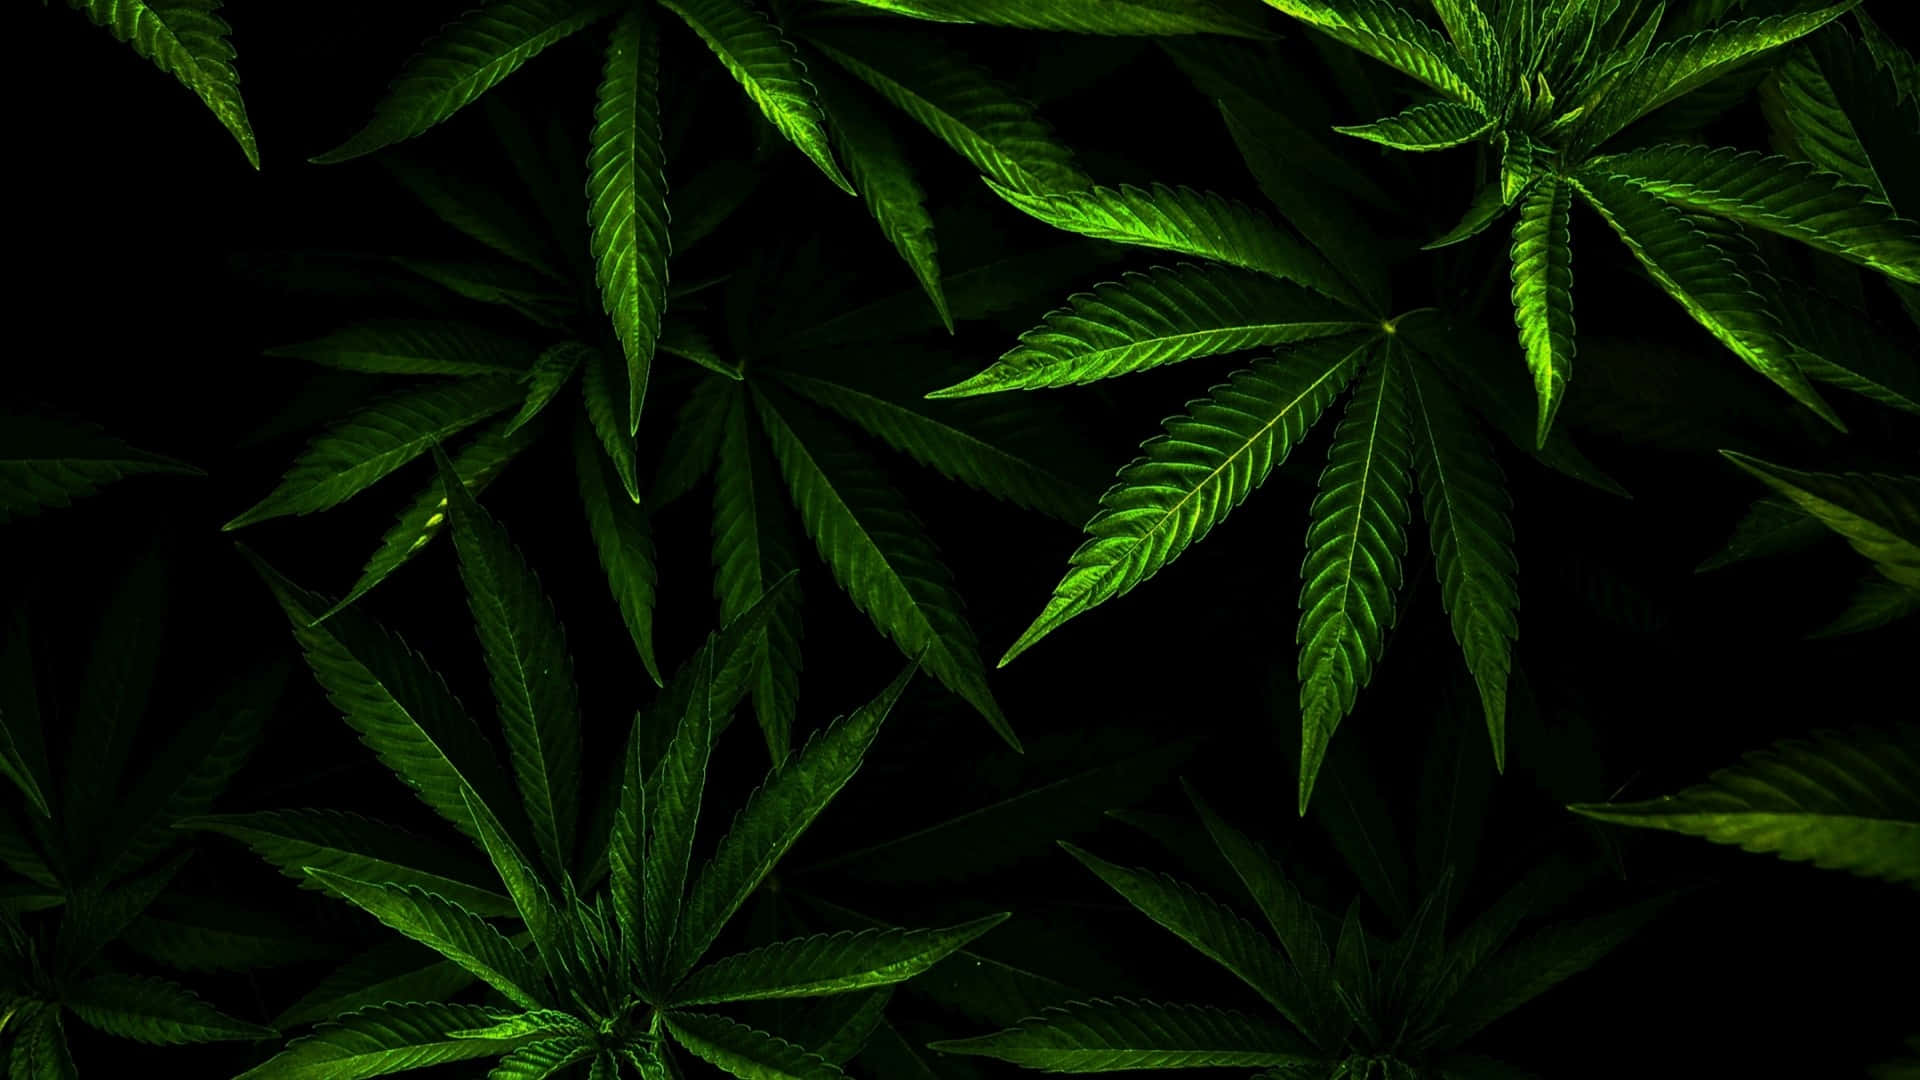 Several Marijuana Leaves In Black